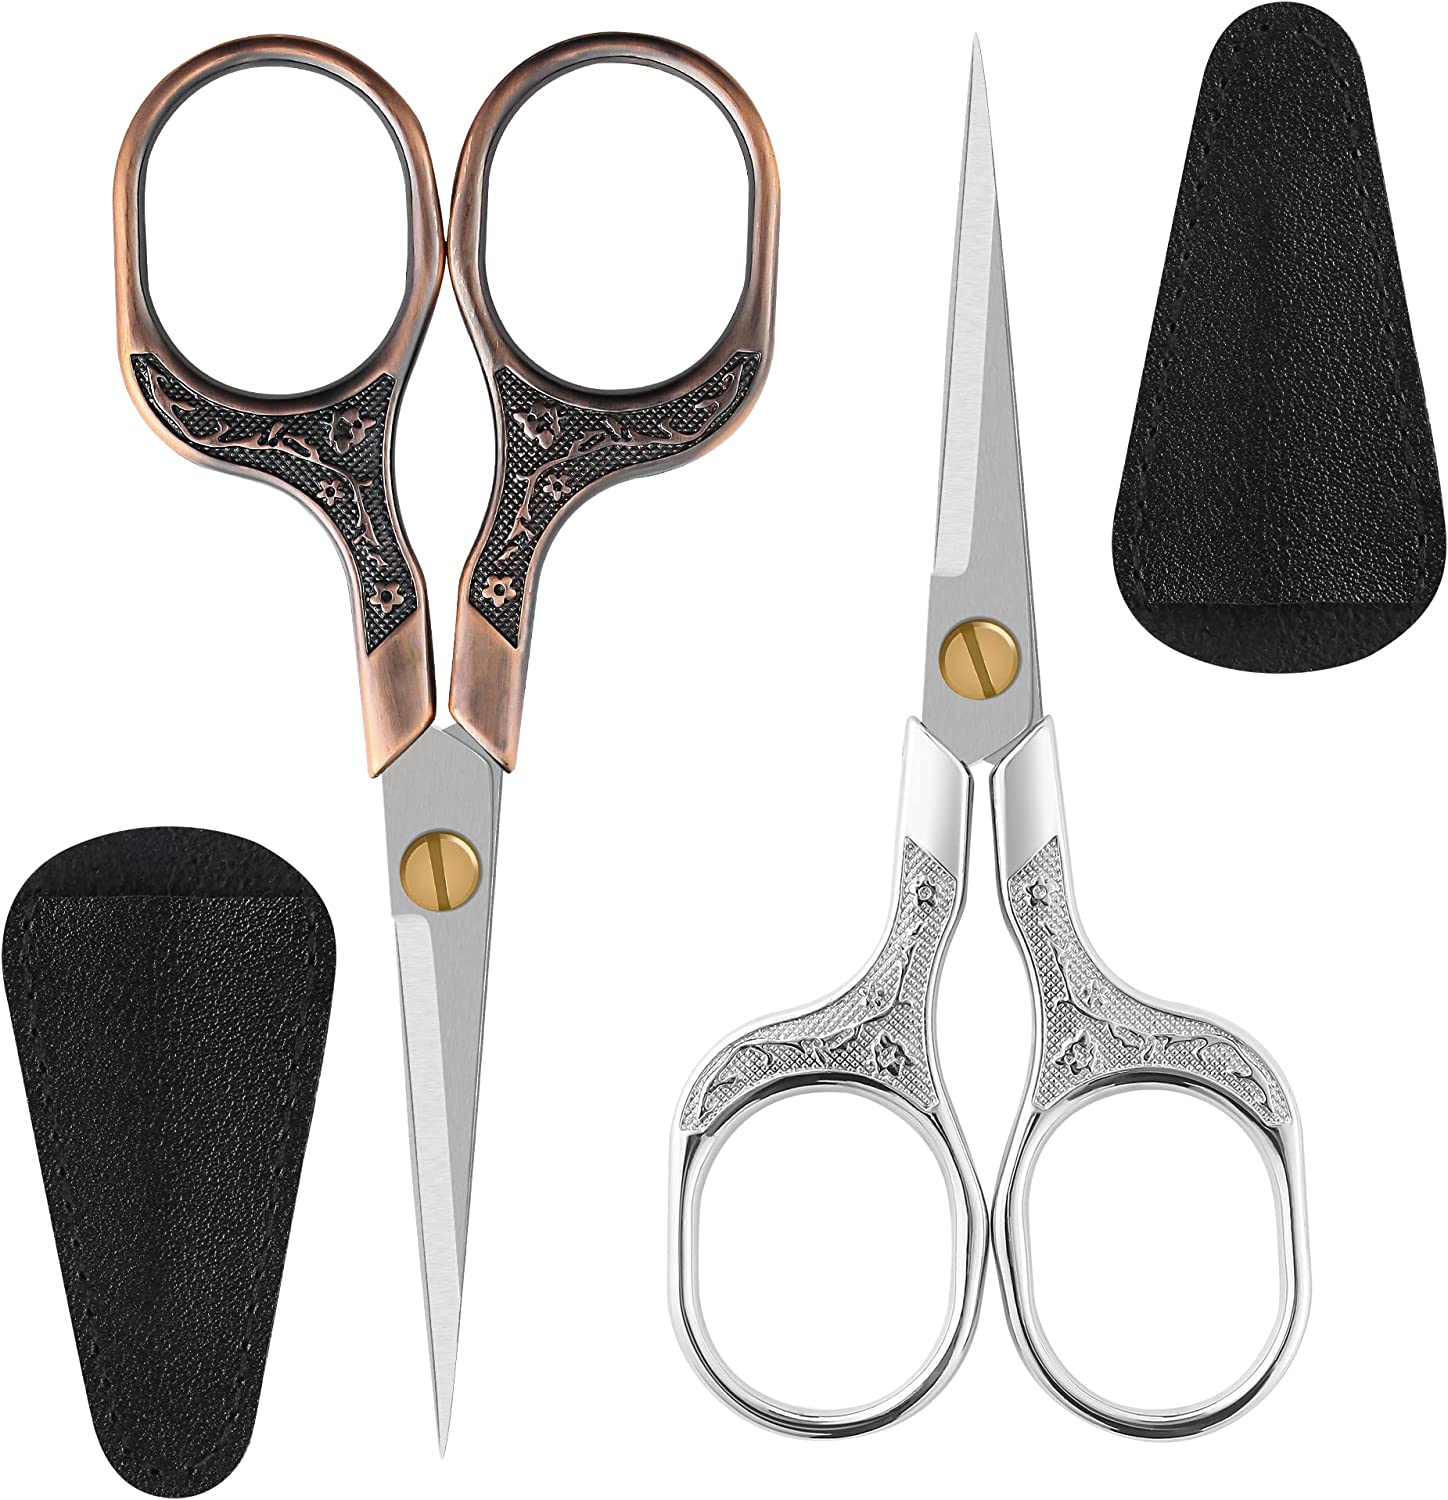 1 Small sharp scissors-Glexal 5 Inch Precision Scissors-2 pack,razor Sharp  Blade Shears for craft embroidery sewing school office